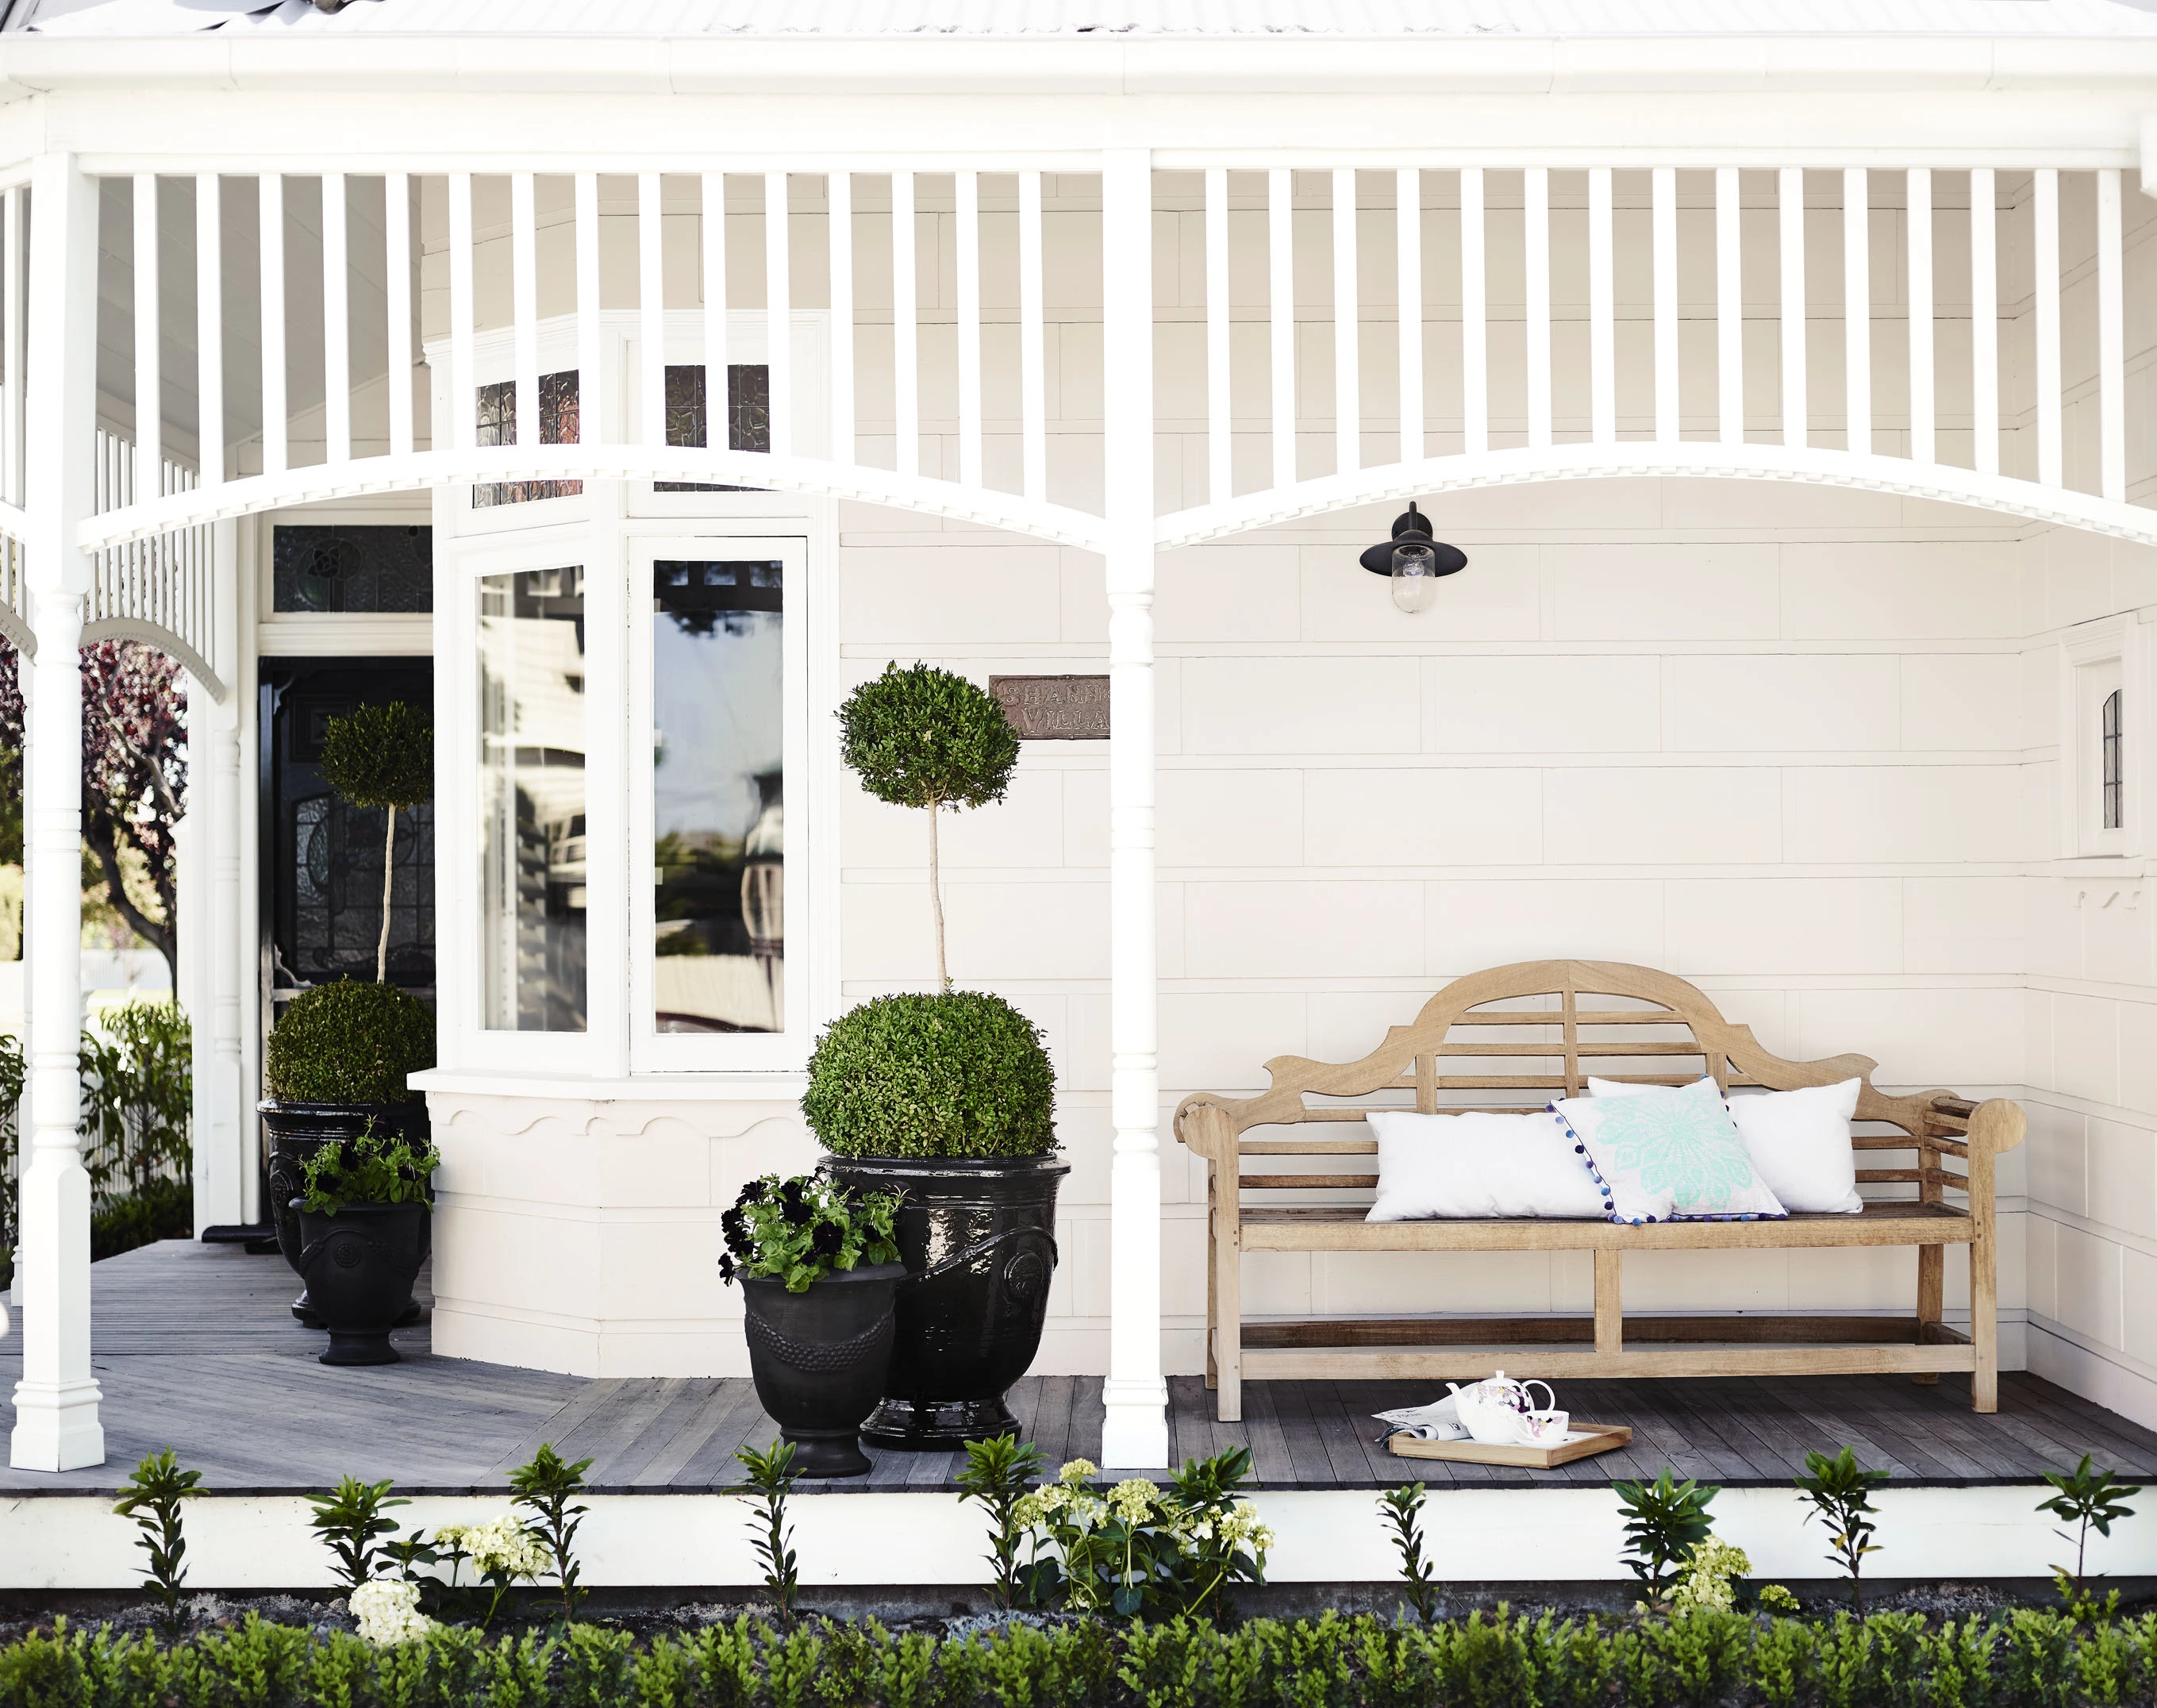 Cream house with white veranda posts and trim